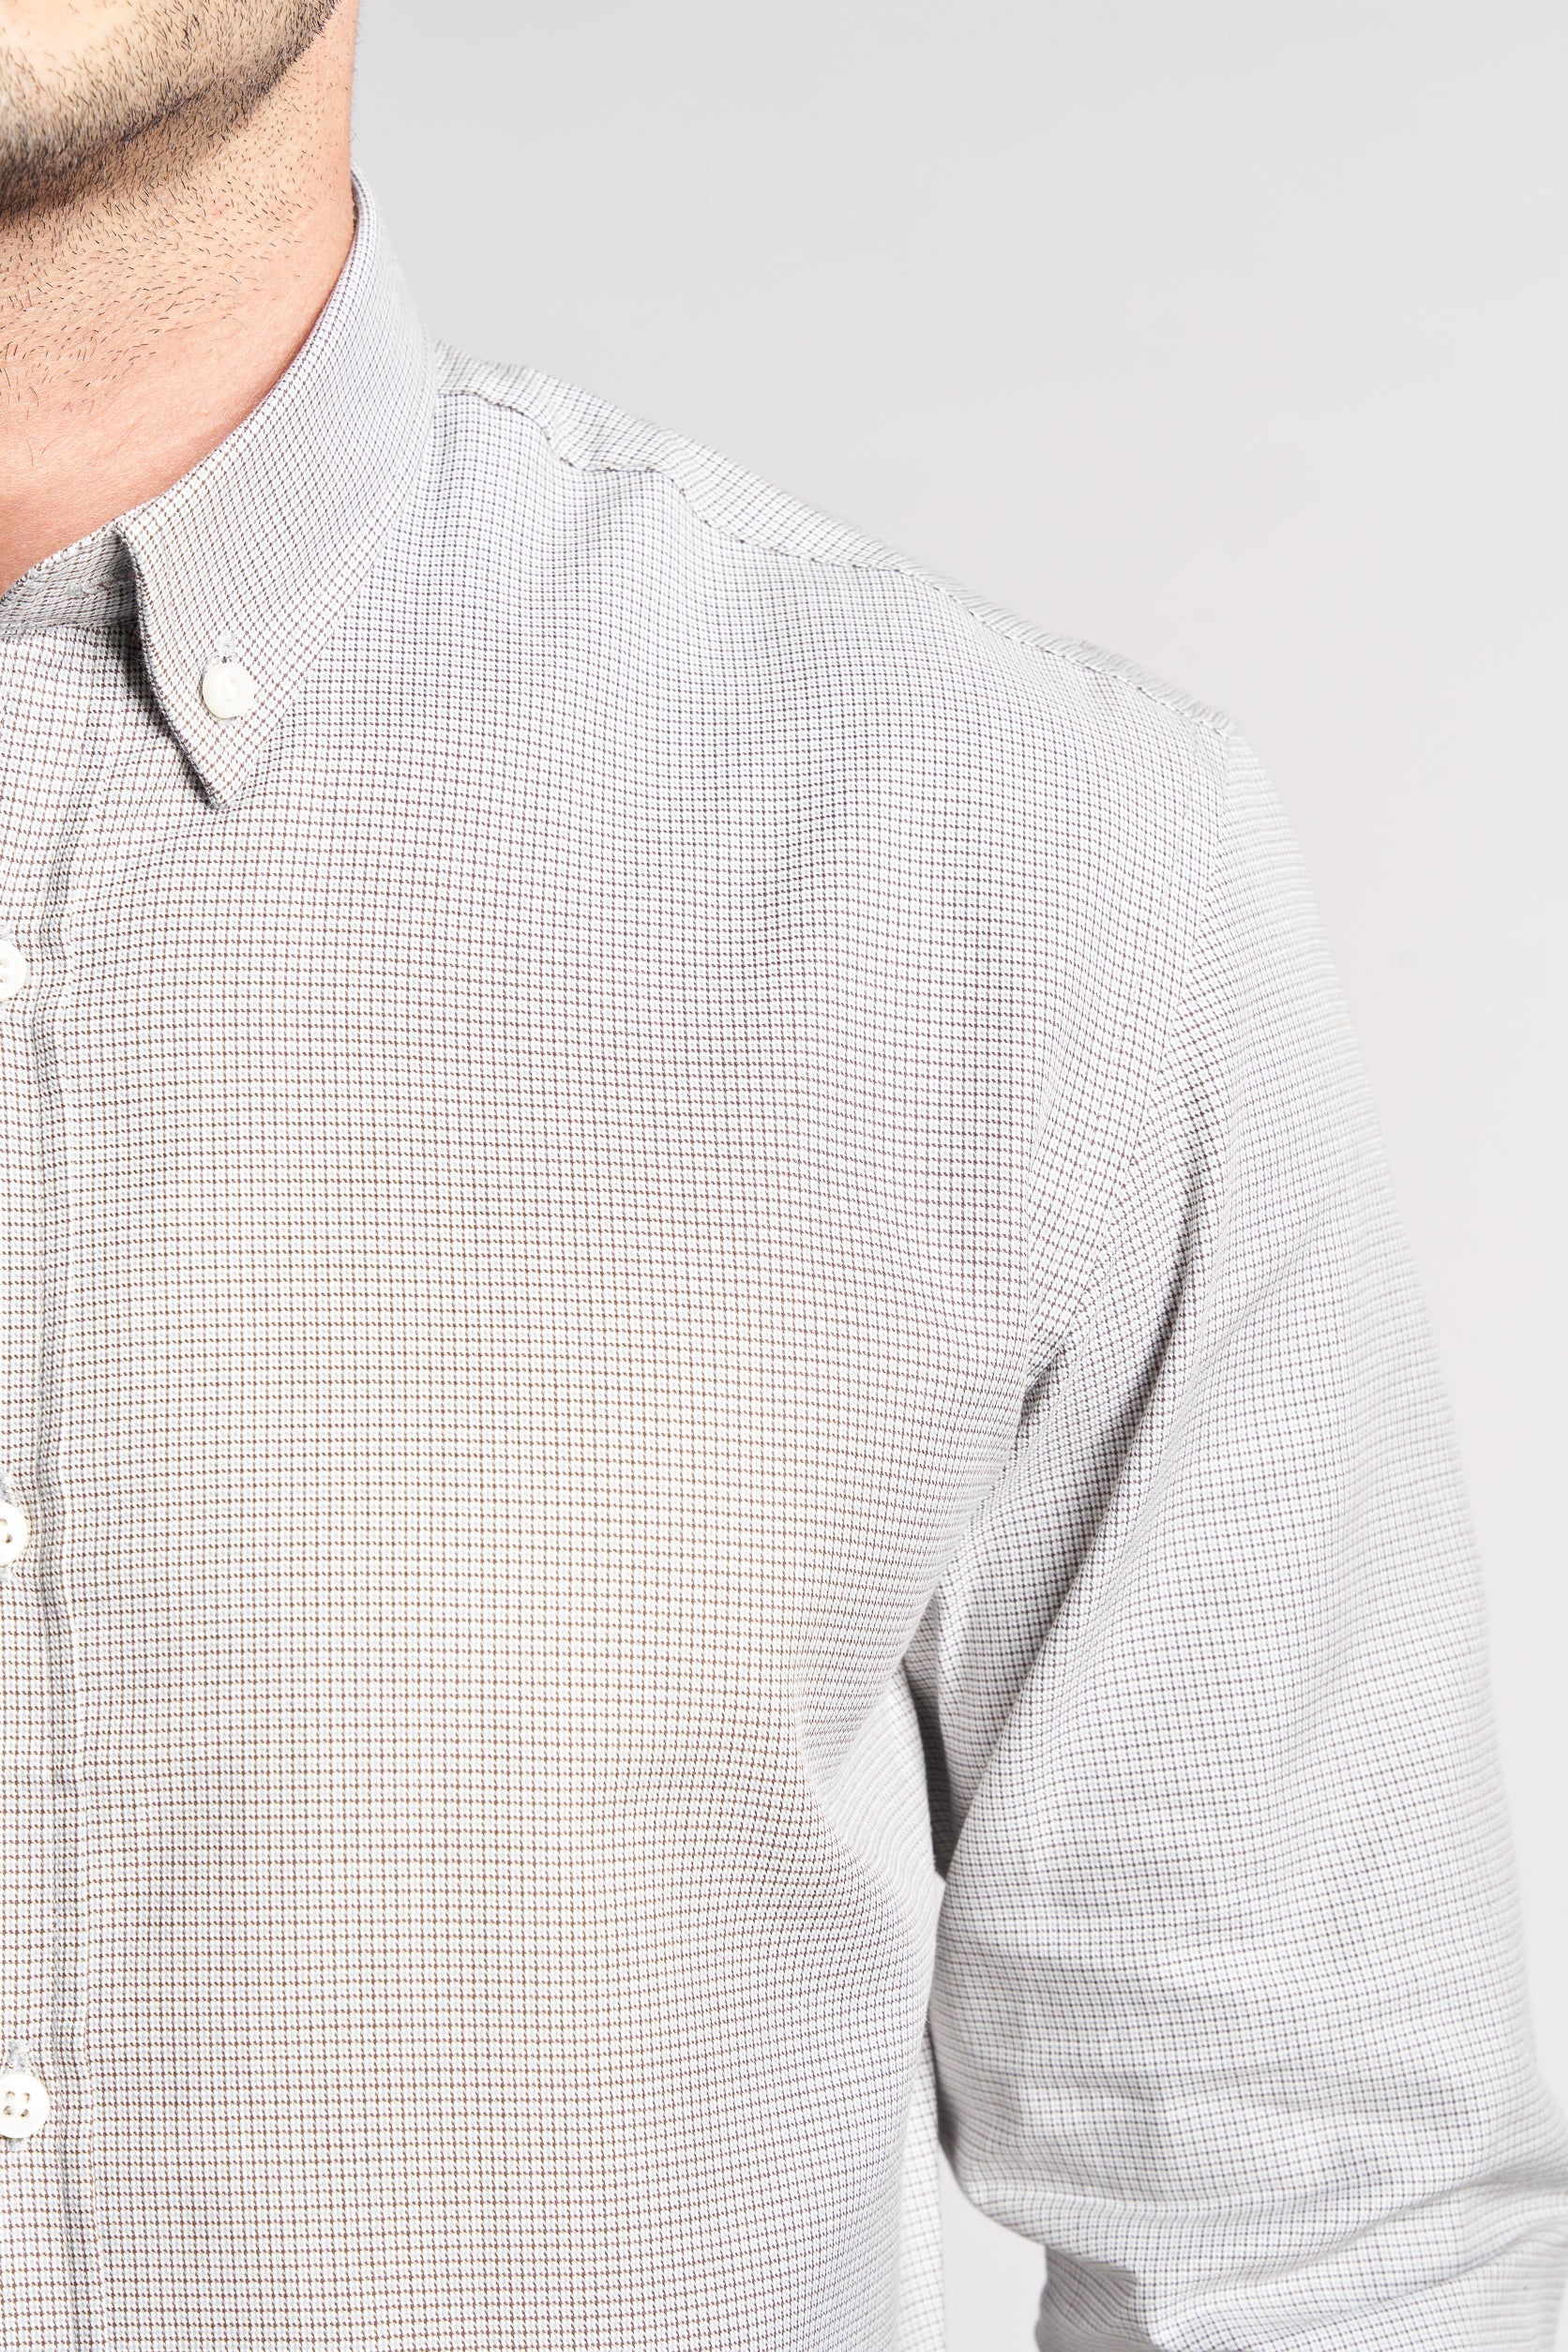 brown Cotton Long Sleeve Shirt(645)